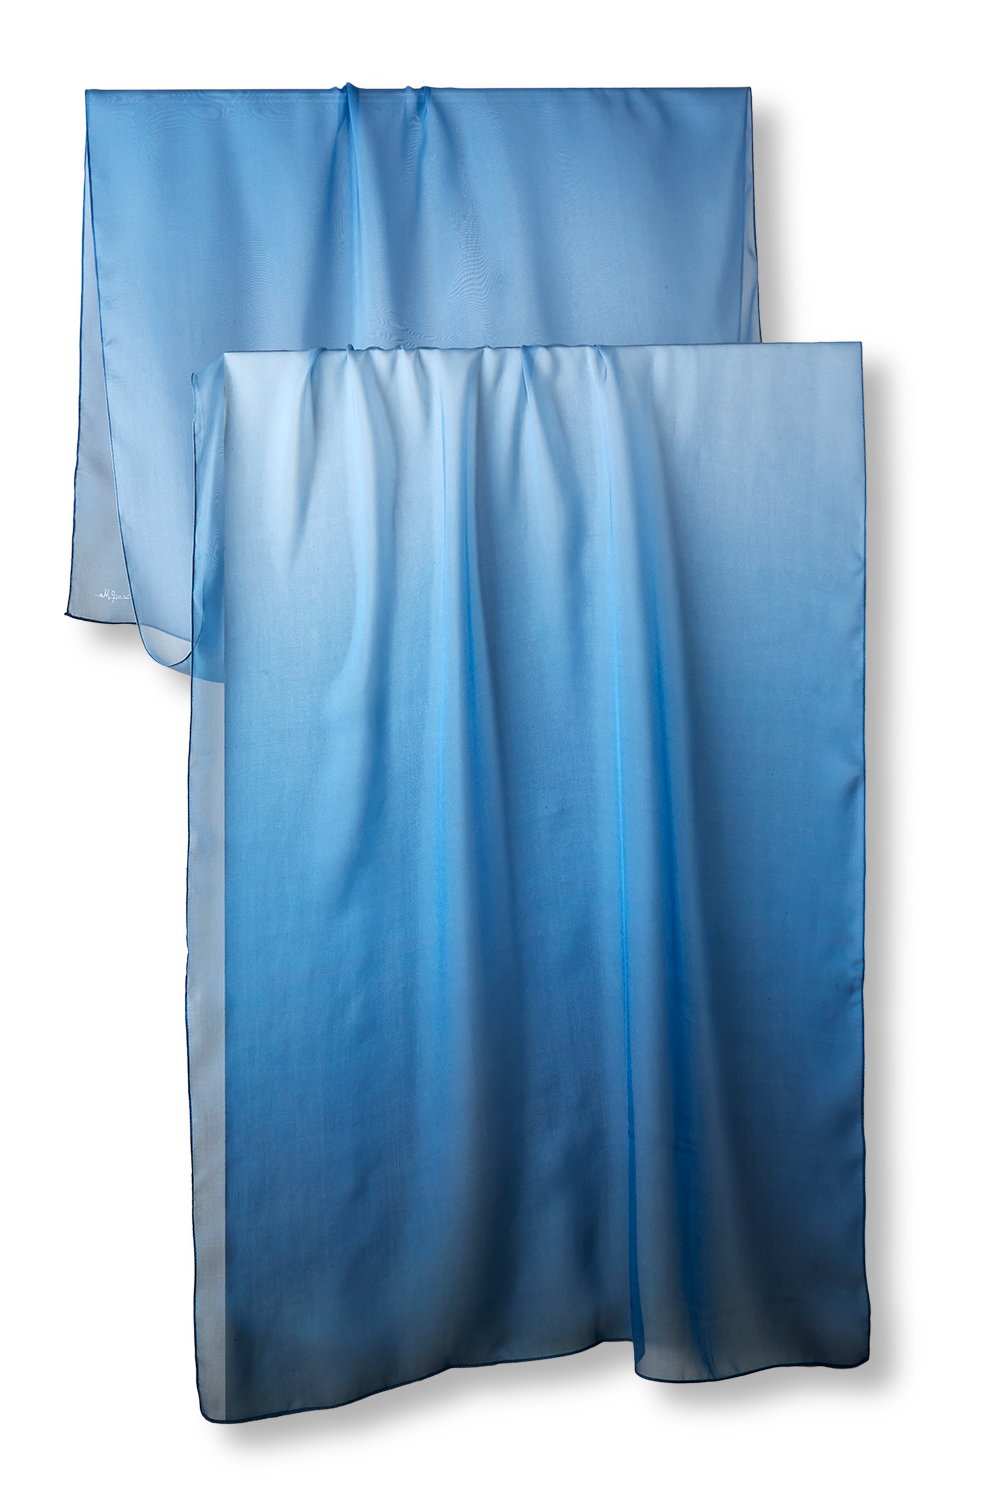 Echarpe Degradê azul em mousseline de seda | 60X210cm